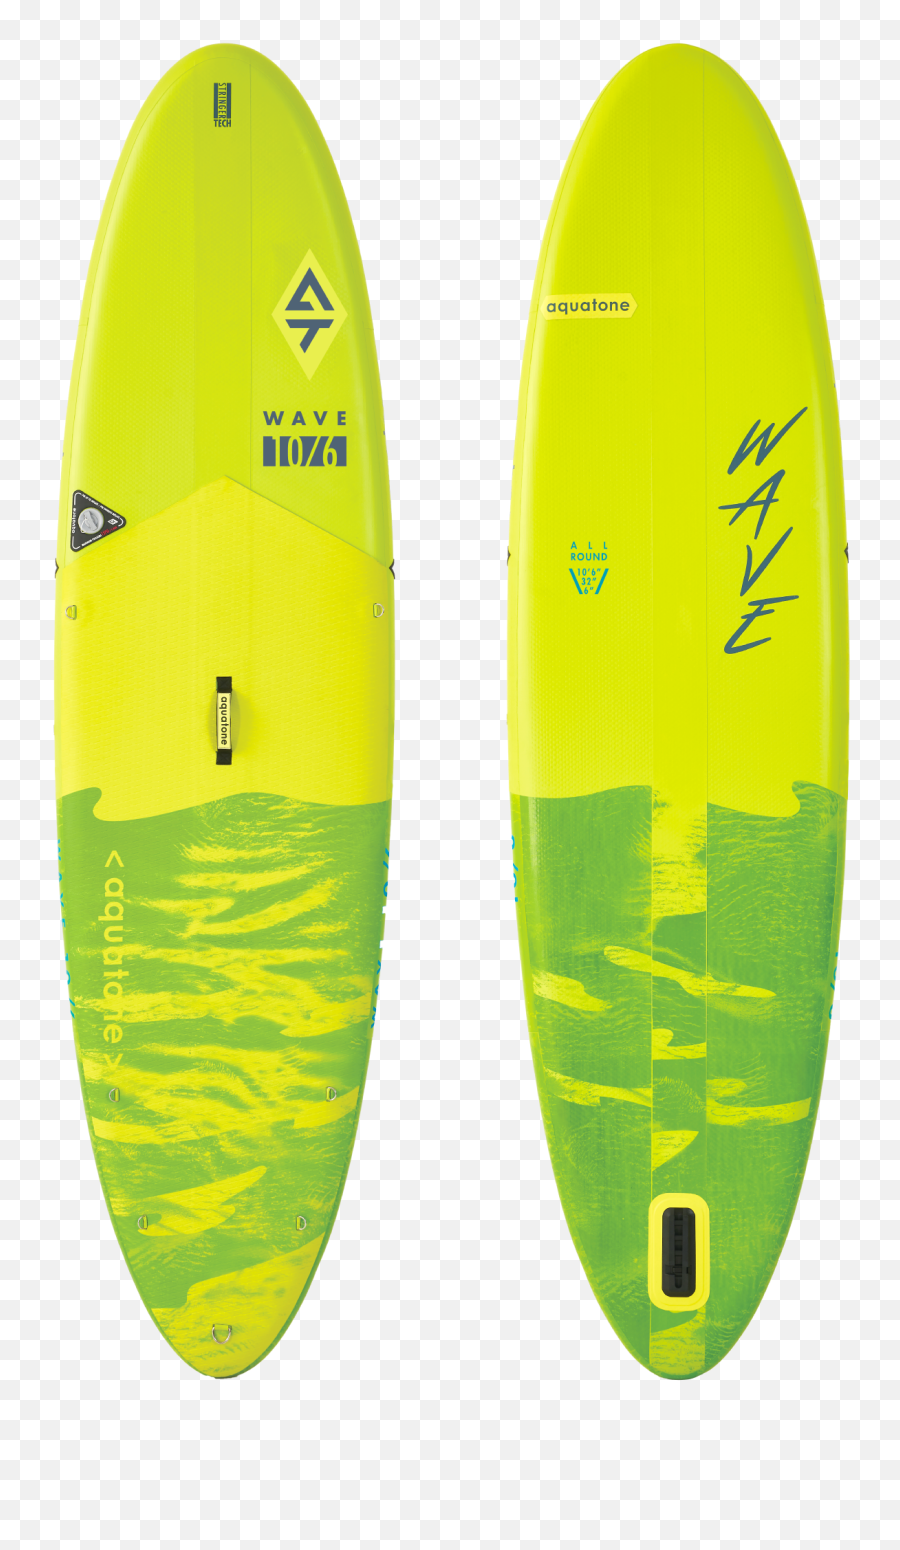 Sup Set - Aquatone Wave 106 Ar Emoji,Emotion Steer Fin Surfboard